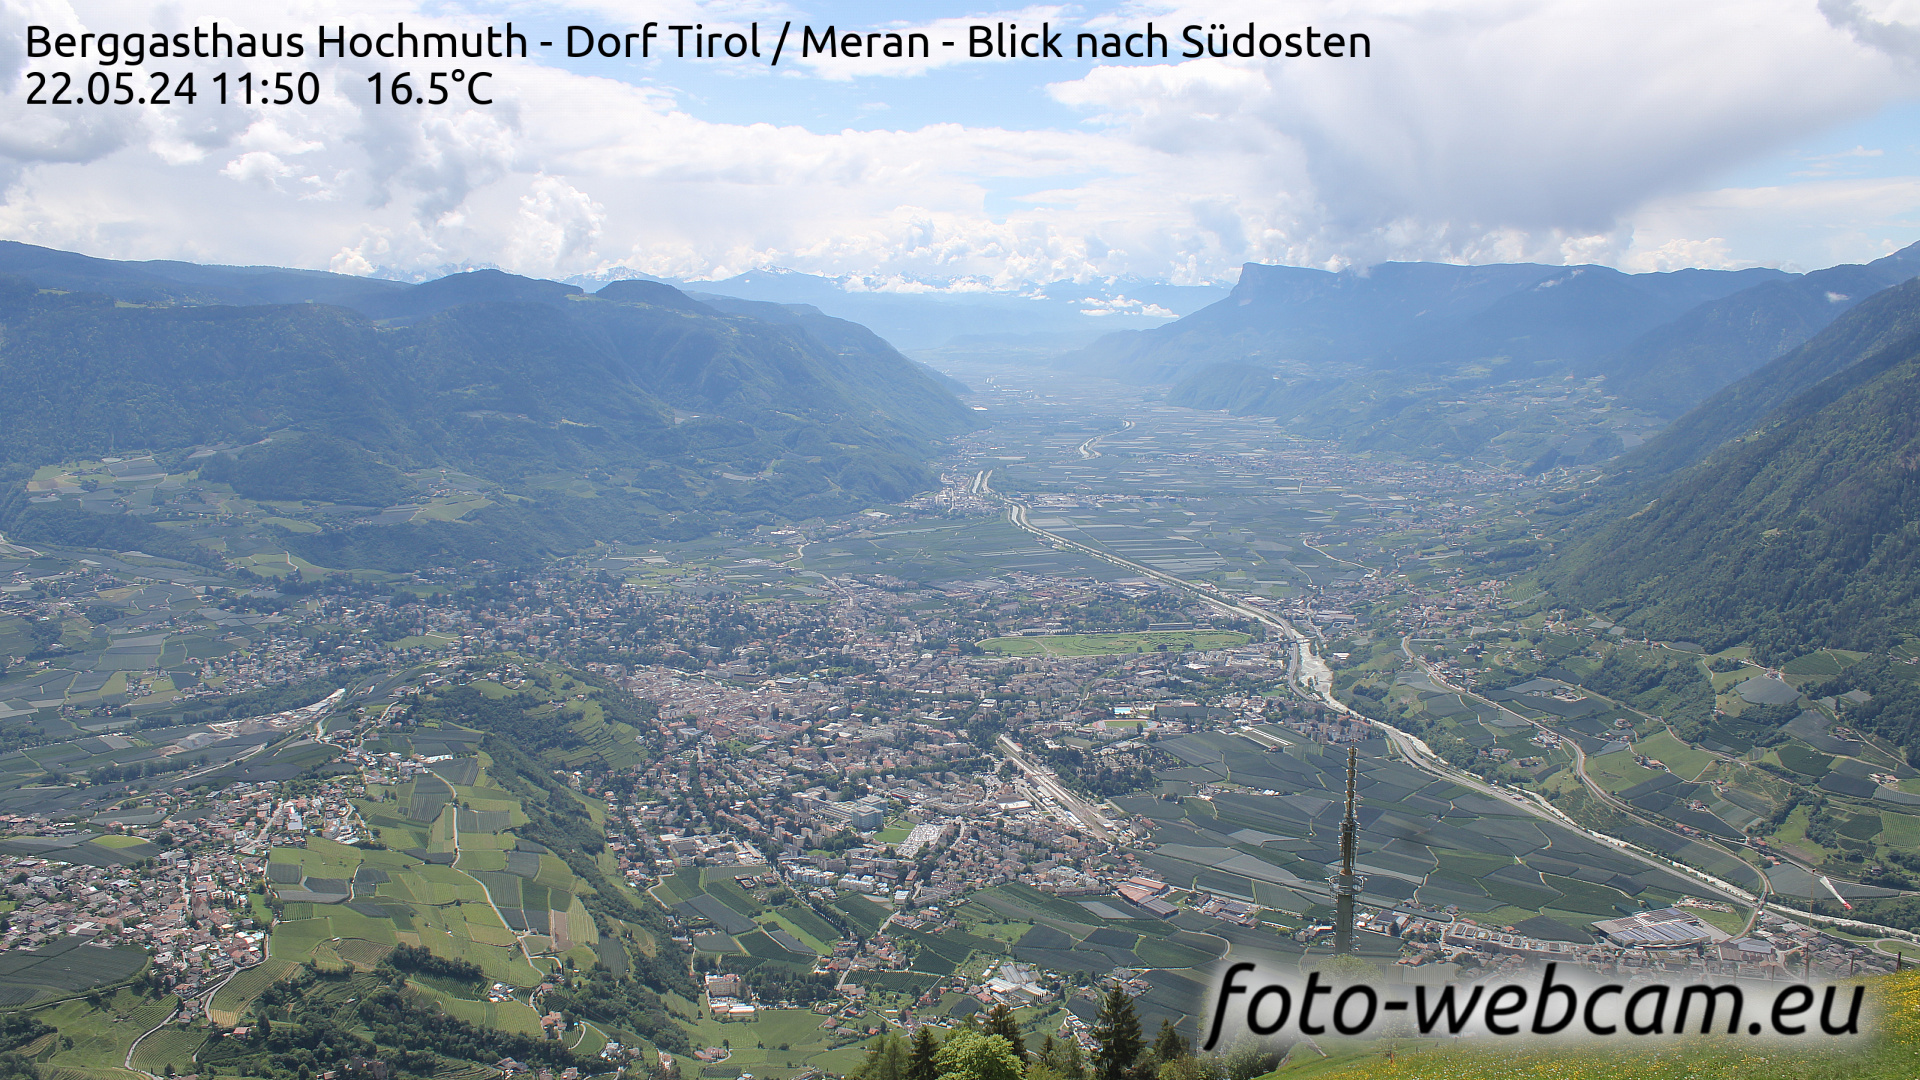 Dorf Tirol Ma. 11:56